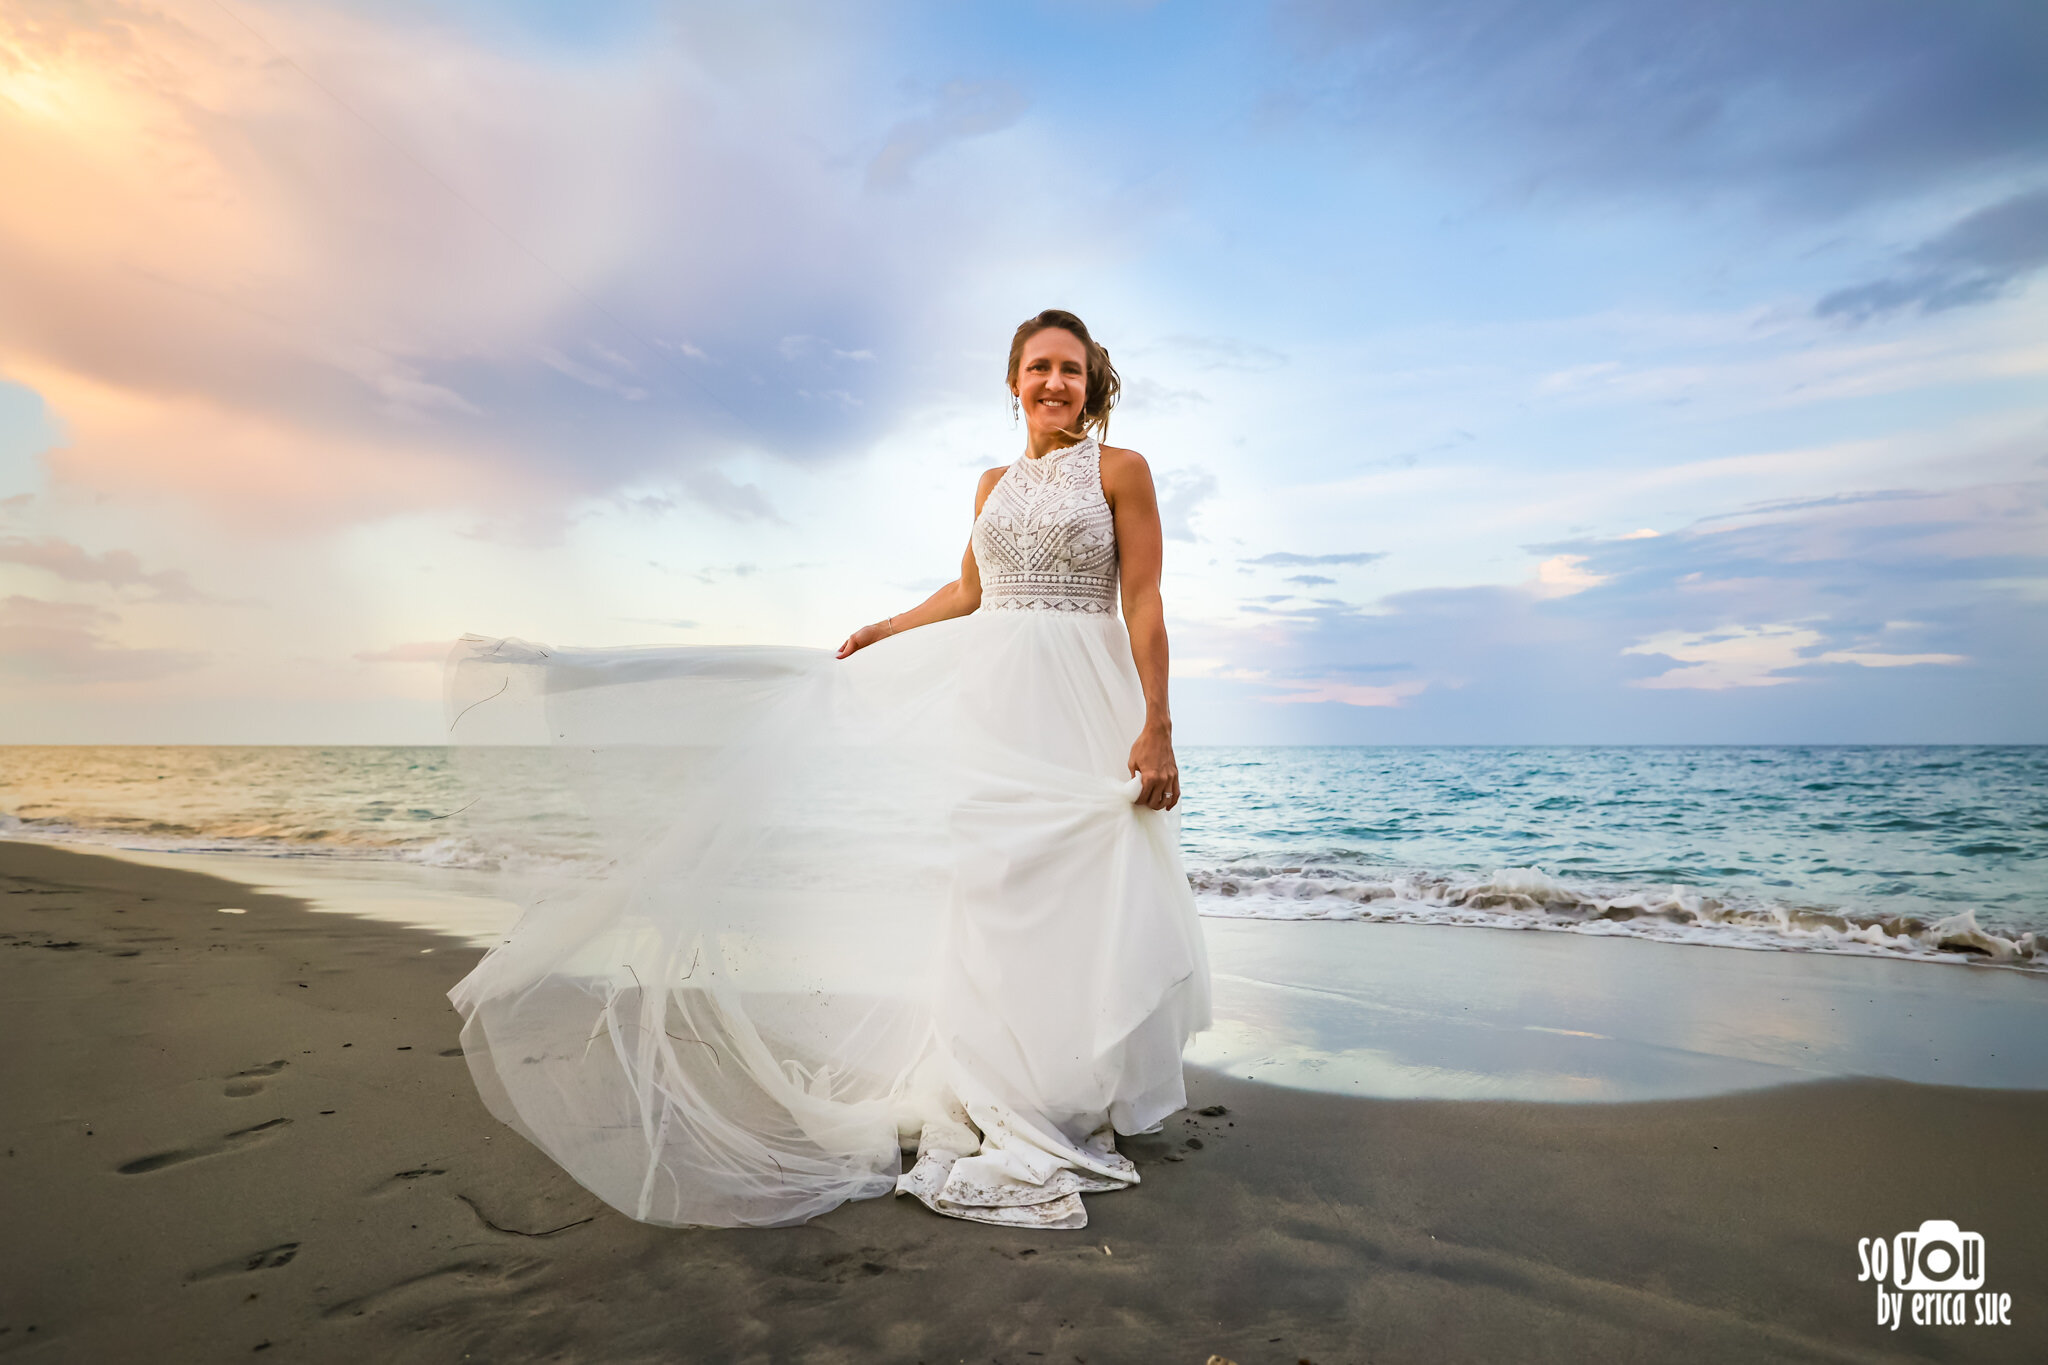 34-so-you-by-erica-sue-dania-beach-wedding-lifestyle-family-photographer-CD8A0984.jpg